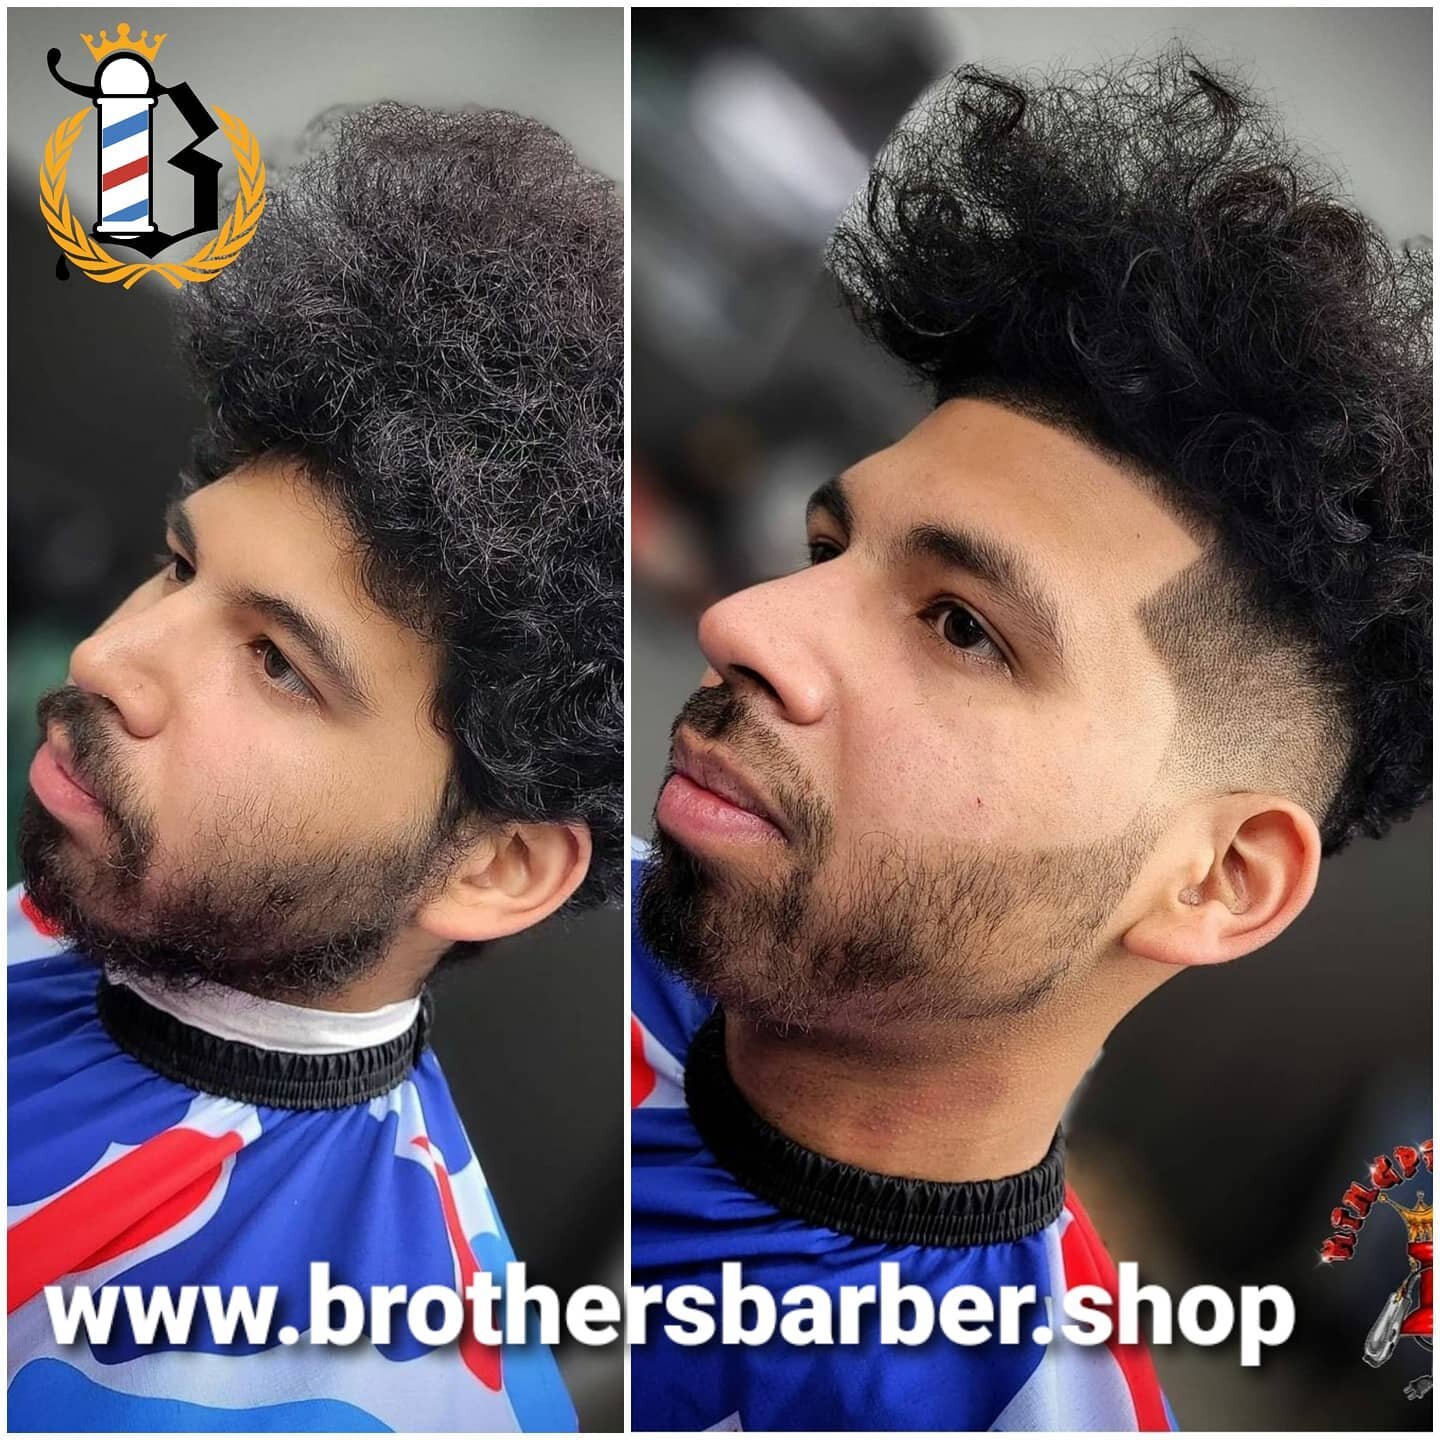 @kingpin.cutz Schedule your appointment online at WWW.BROTHERSBARBER.SHOP
click the link in bio
#billsmafia
#716
#buffalolove 
#gobills
#onebuffalo
#barber
#buffalonewyork
#buffalohair
#barbershop
#williamsvilleny
#barbershopconnect
#hairstyle
#cutof